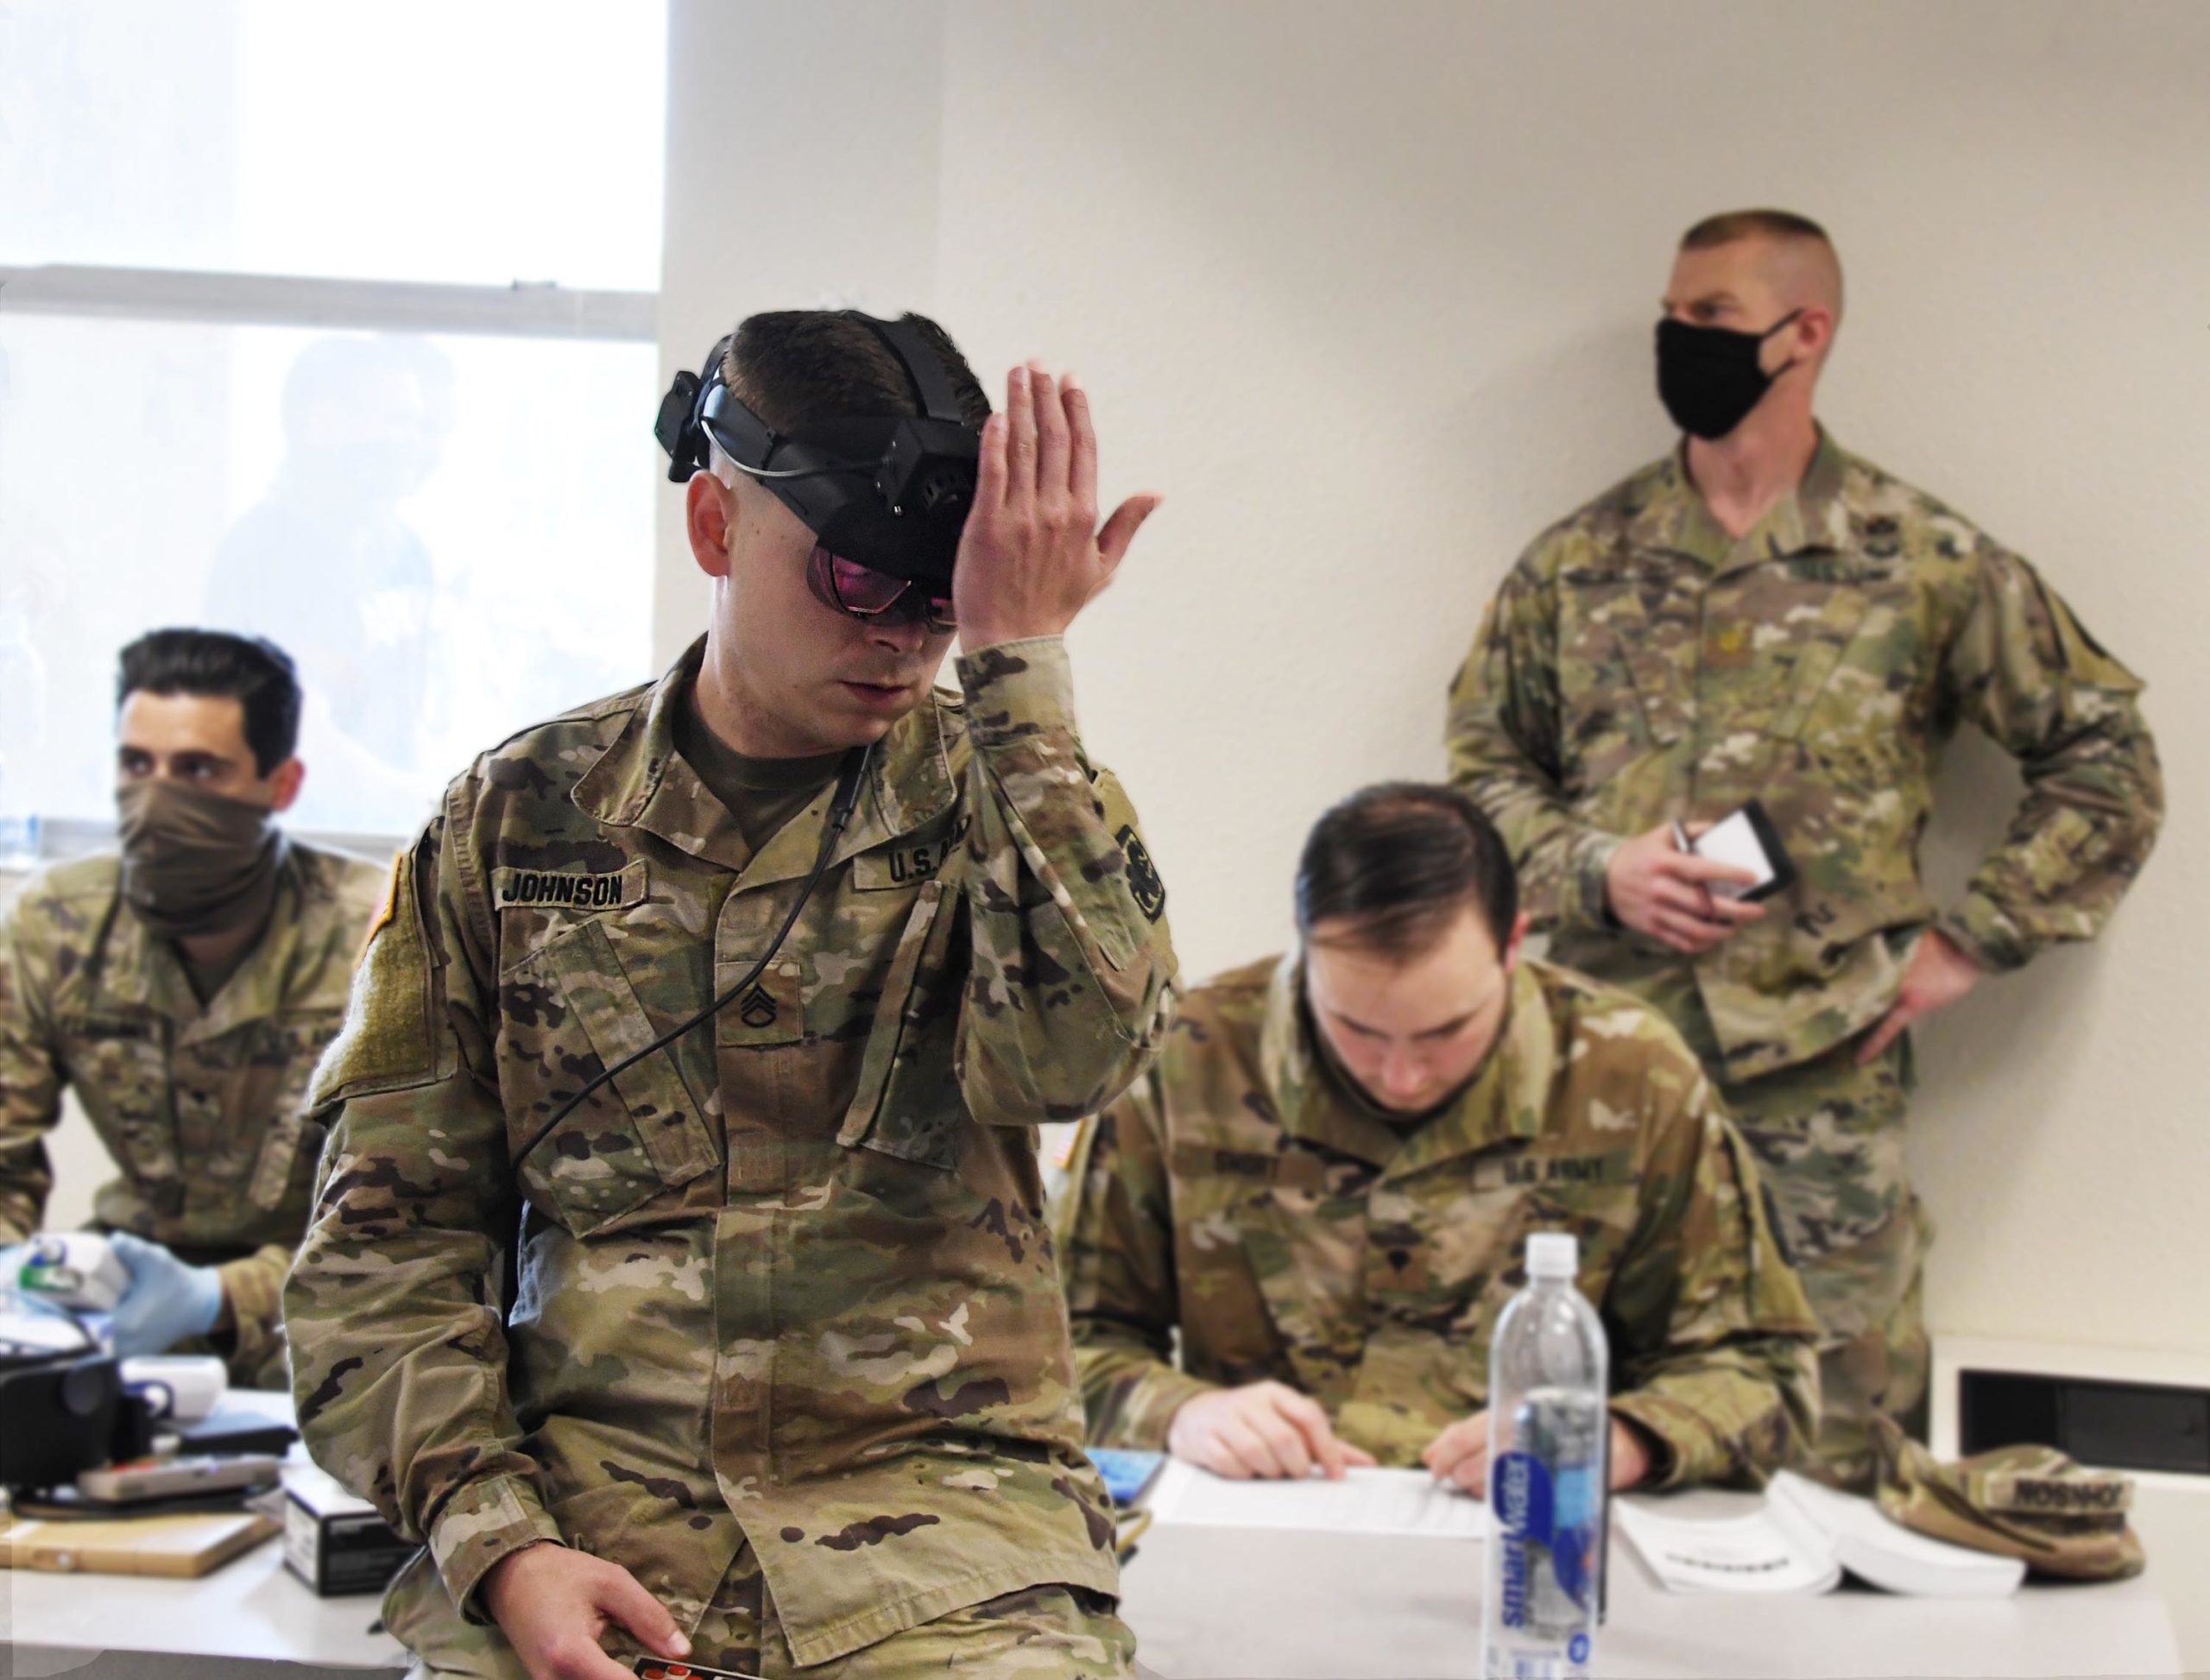 Us Army Pushing To Develop Wearable Sensors To Detect Coronavirus Symptoms